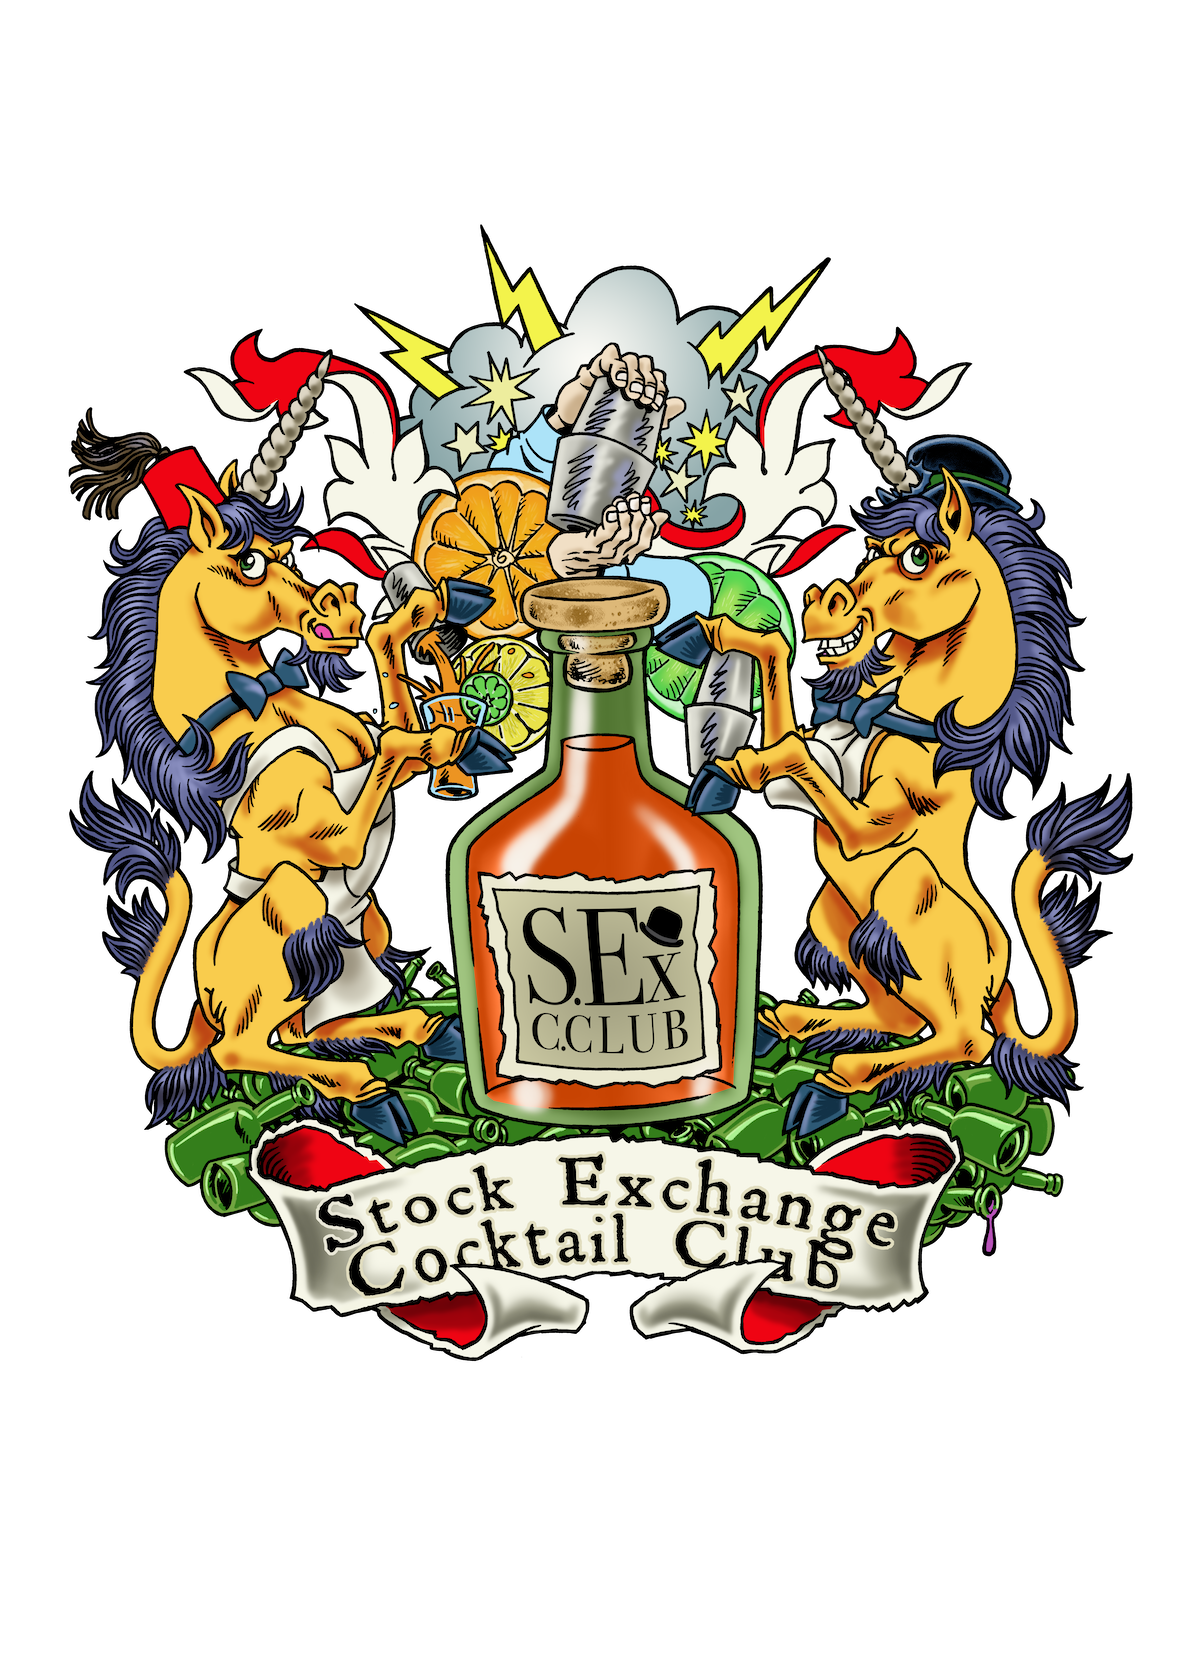 Stock Exchange Cocktail Club logo